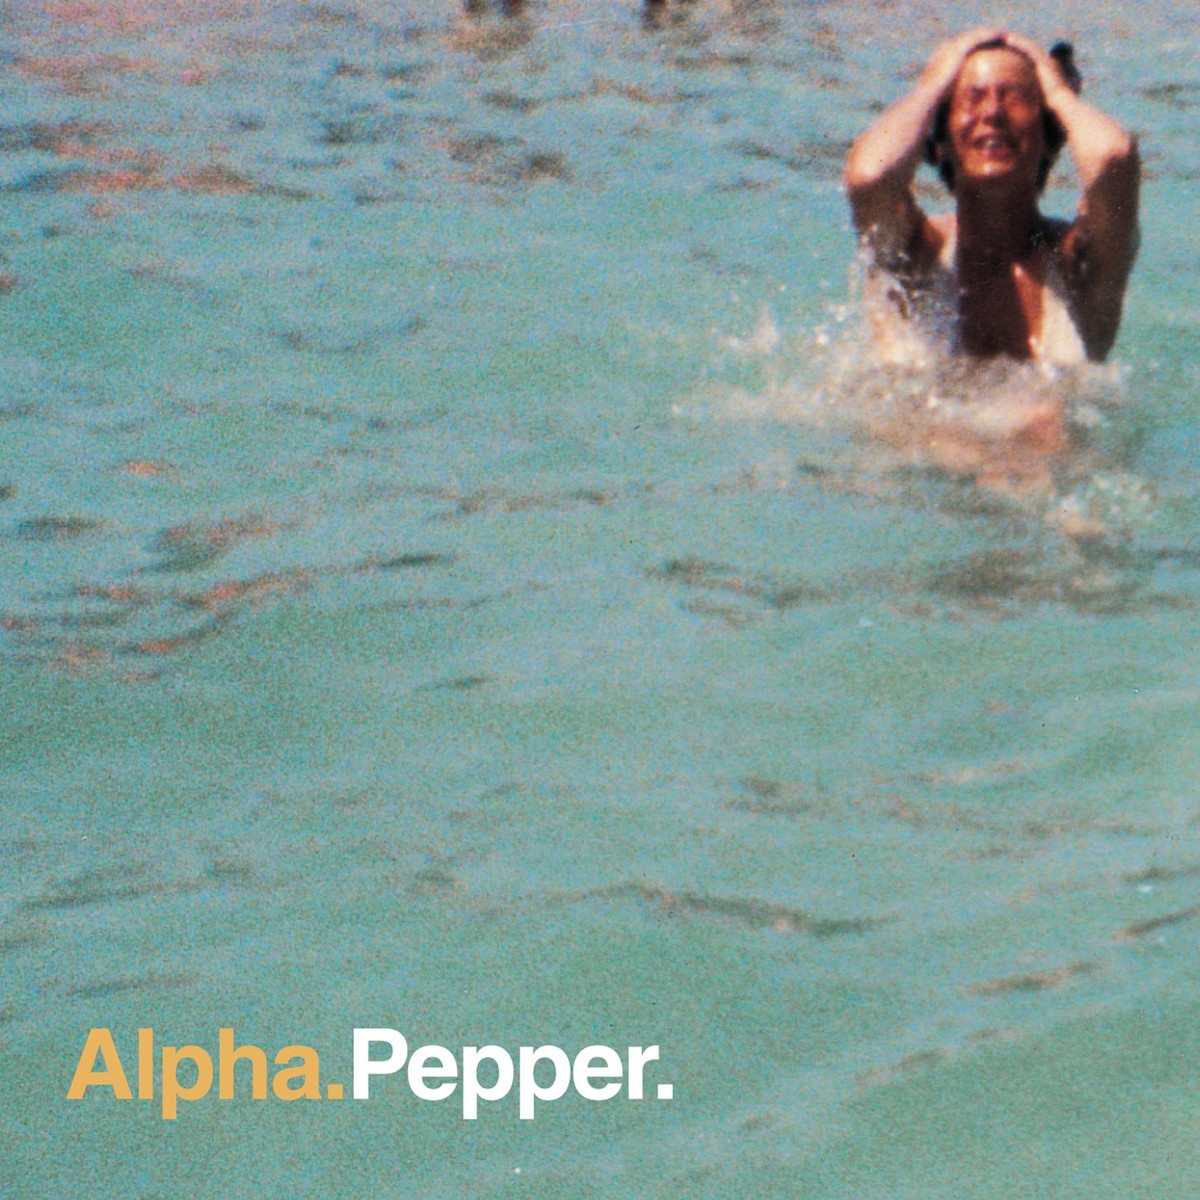 Pepper (1995)